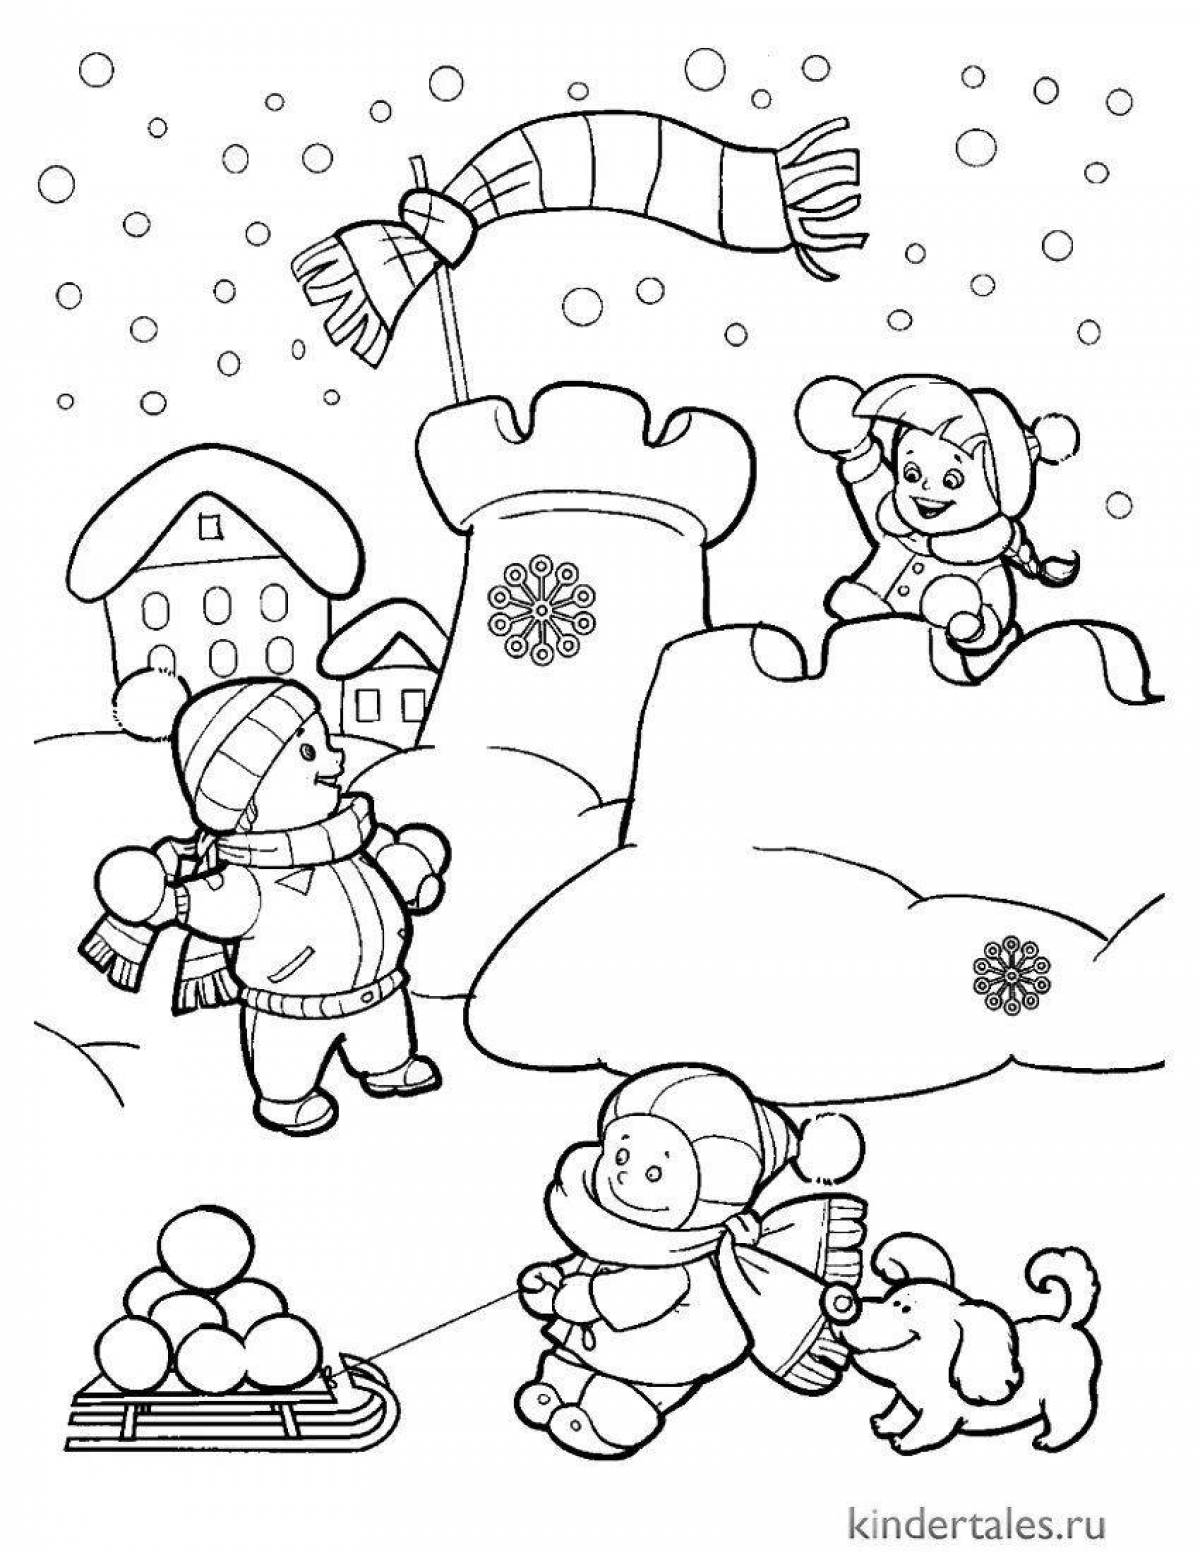 Dazzling children's winter coloring book